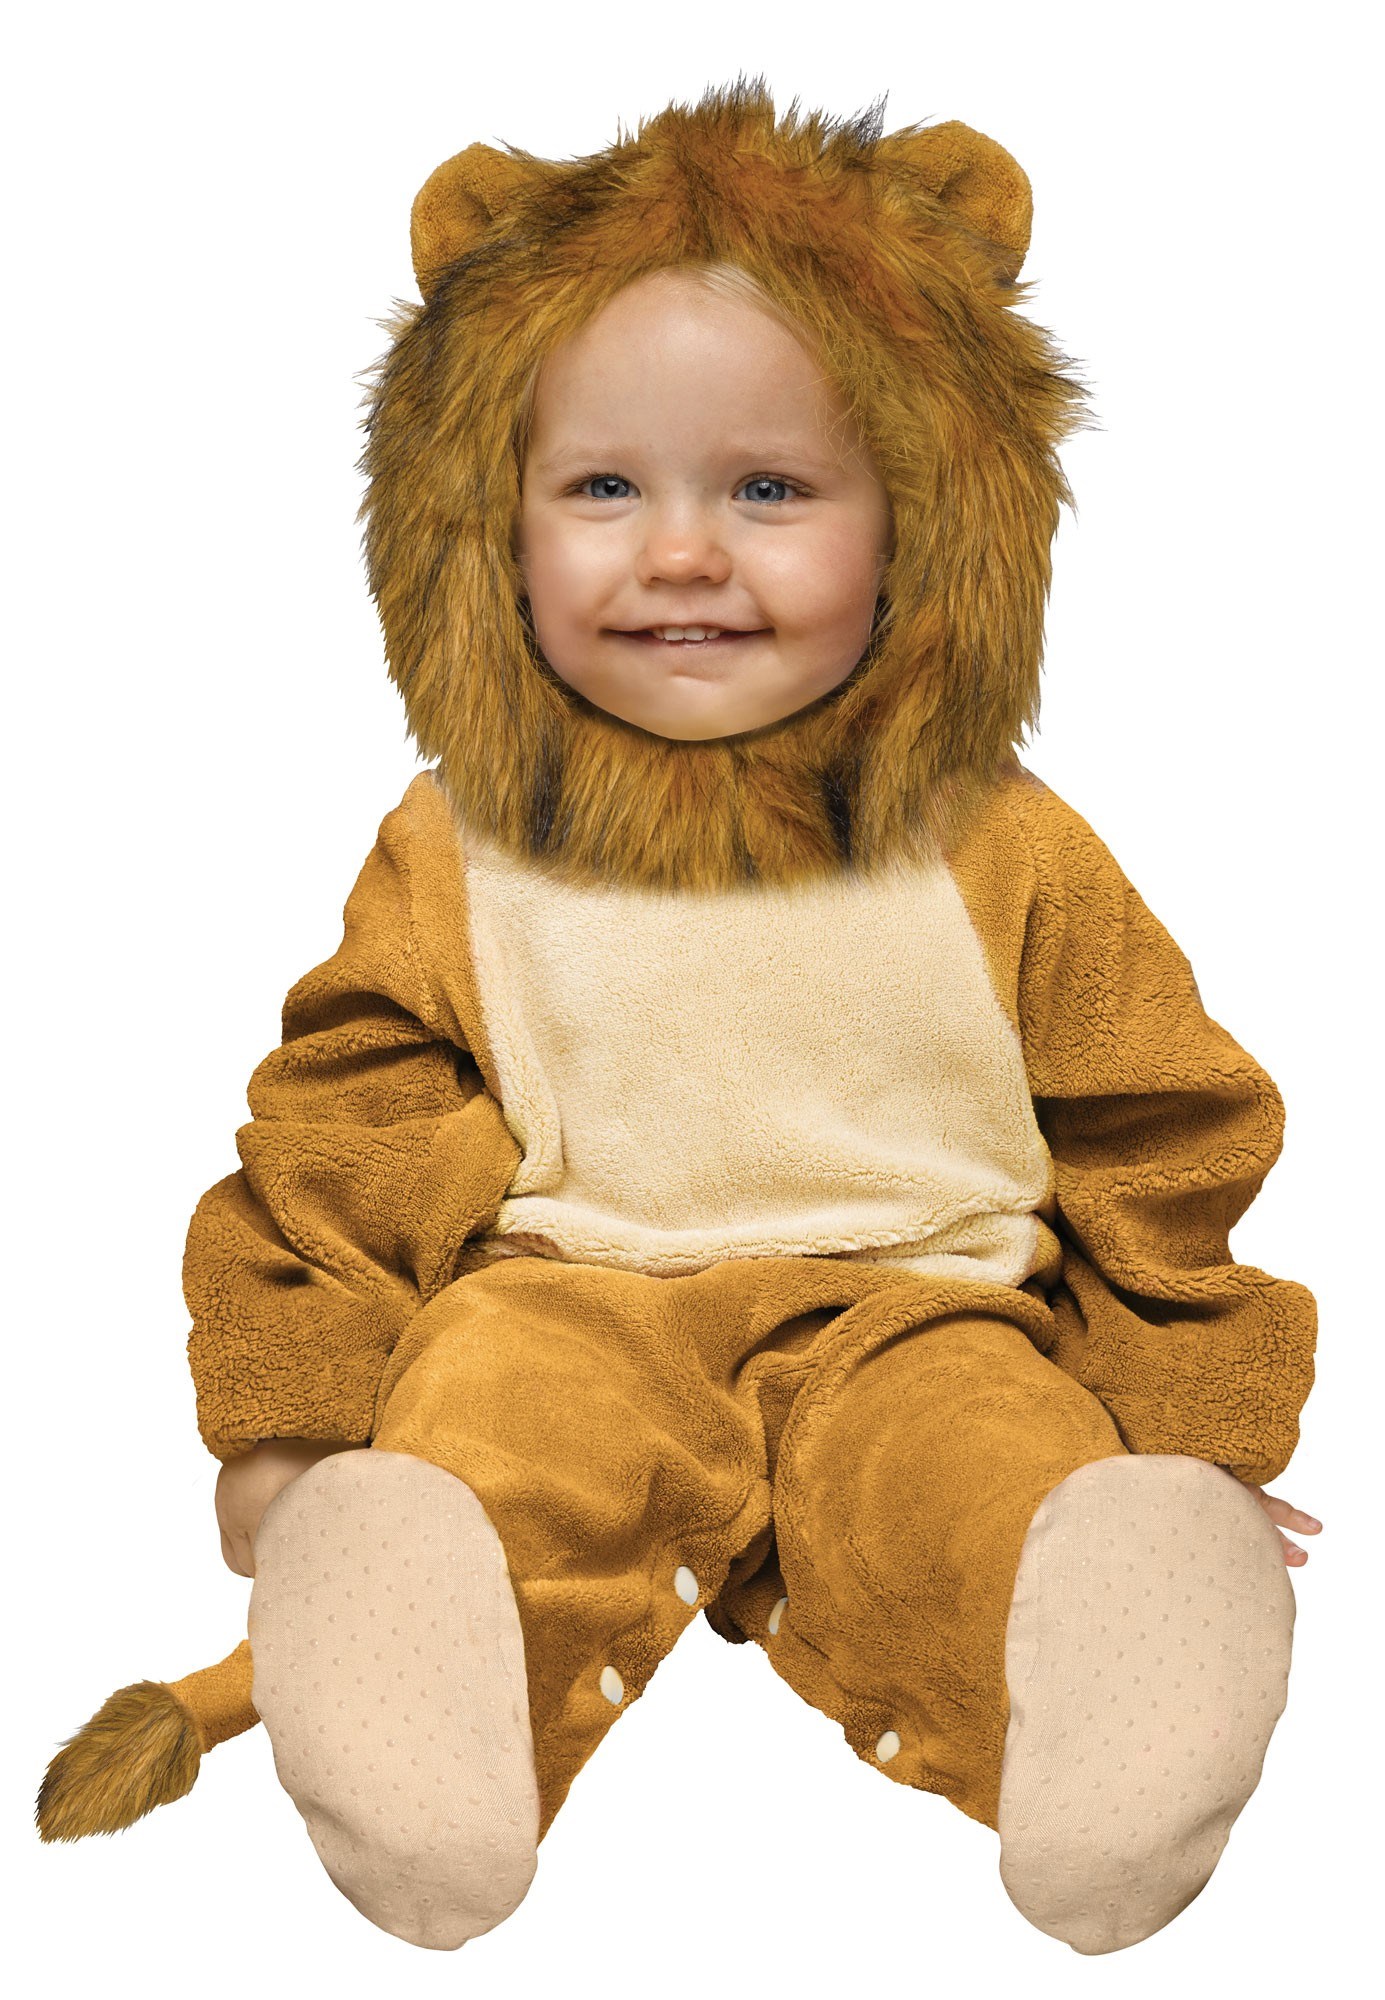 Cuddly Lion Infant Costume